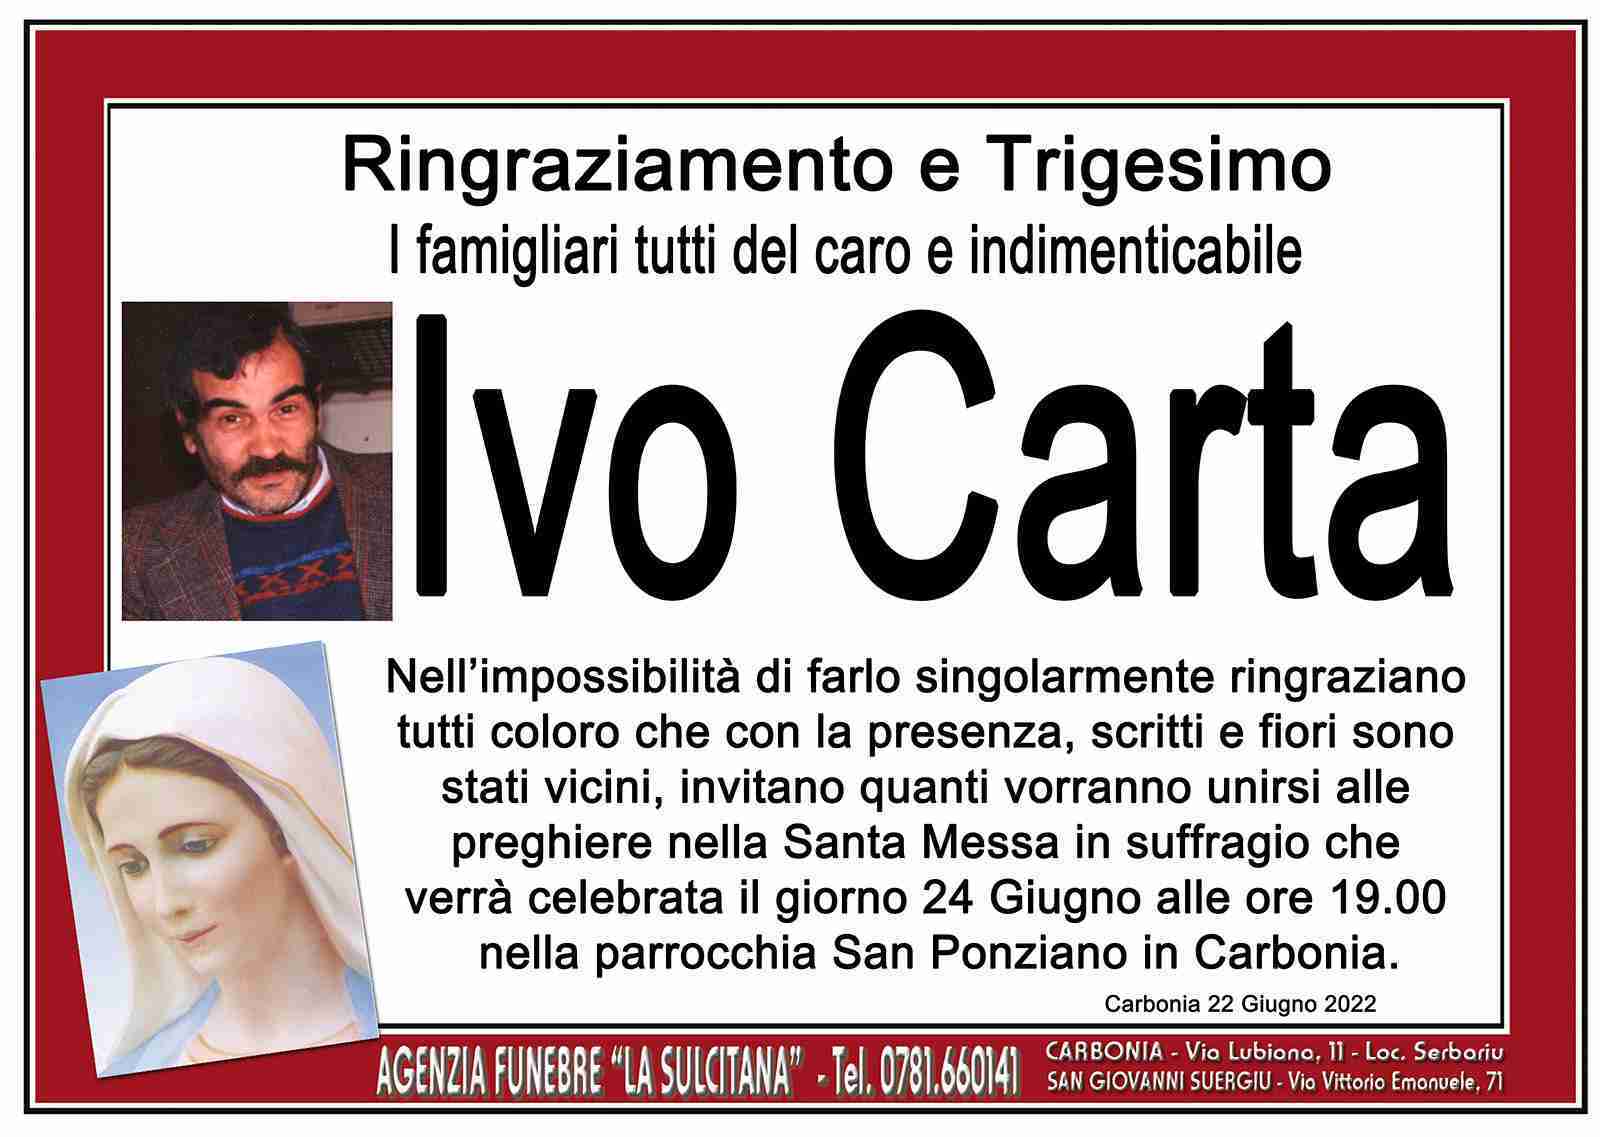 Ivo Carta